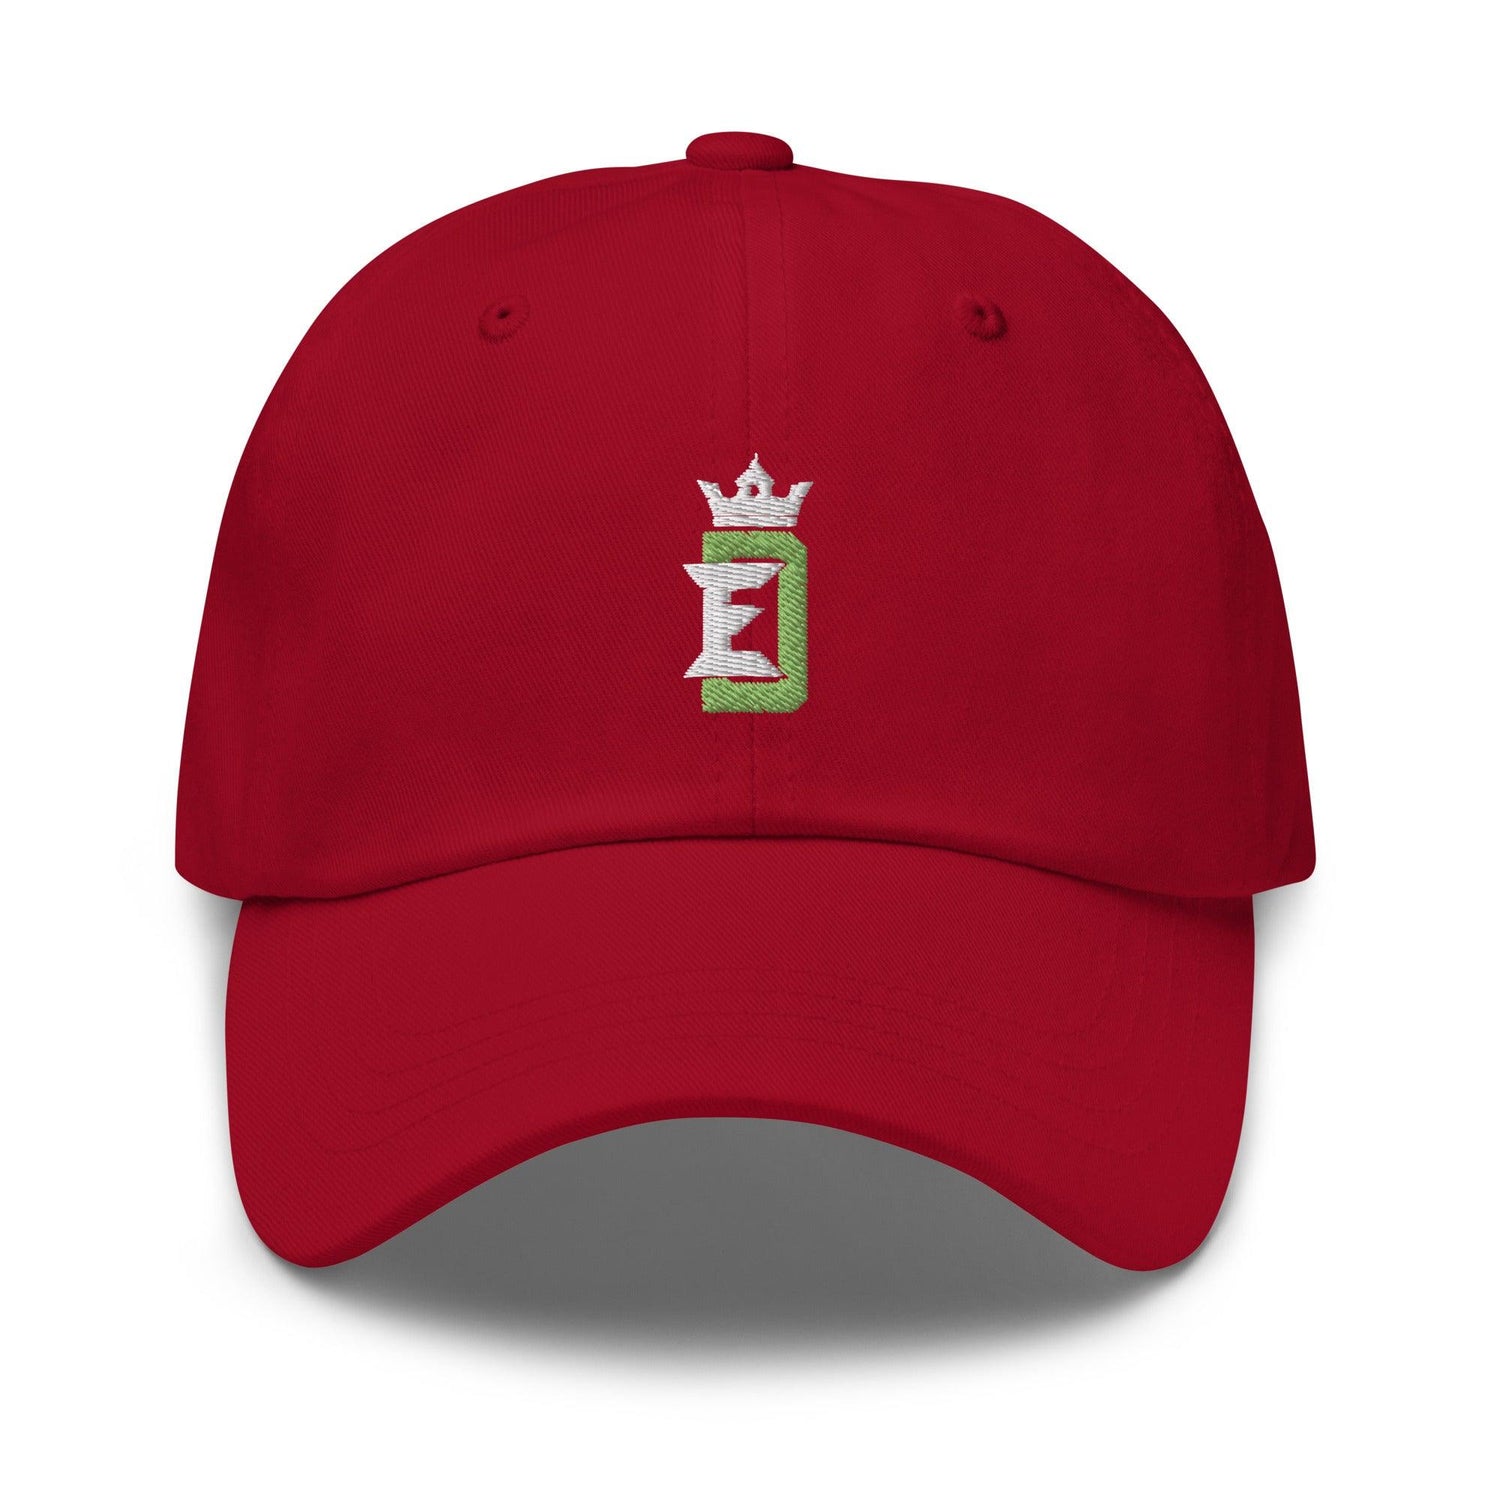 Donye Evans "Royalty" hat - Fan Arch